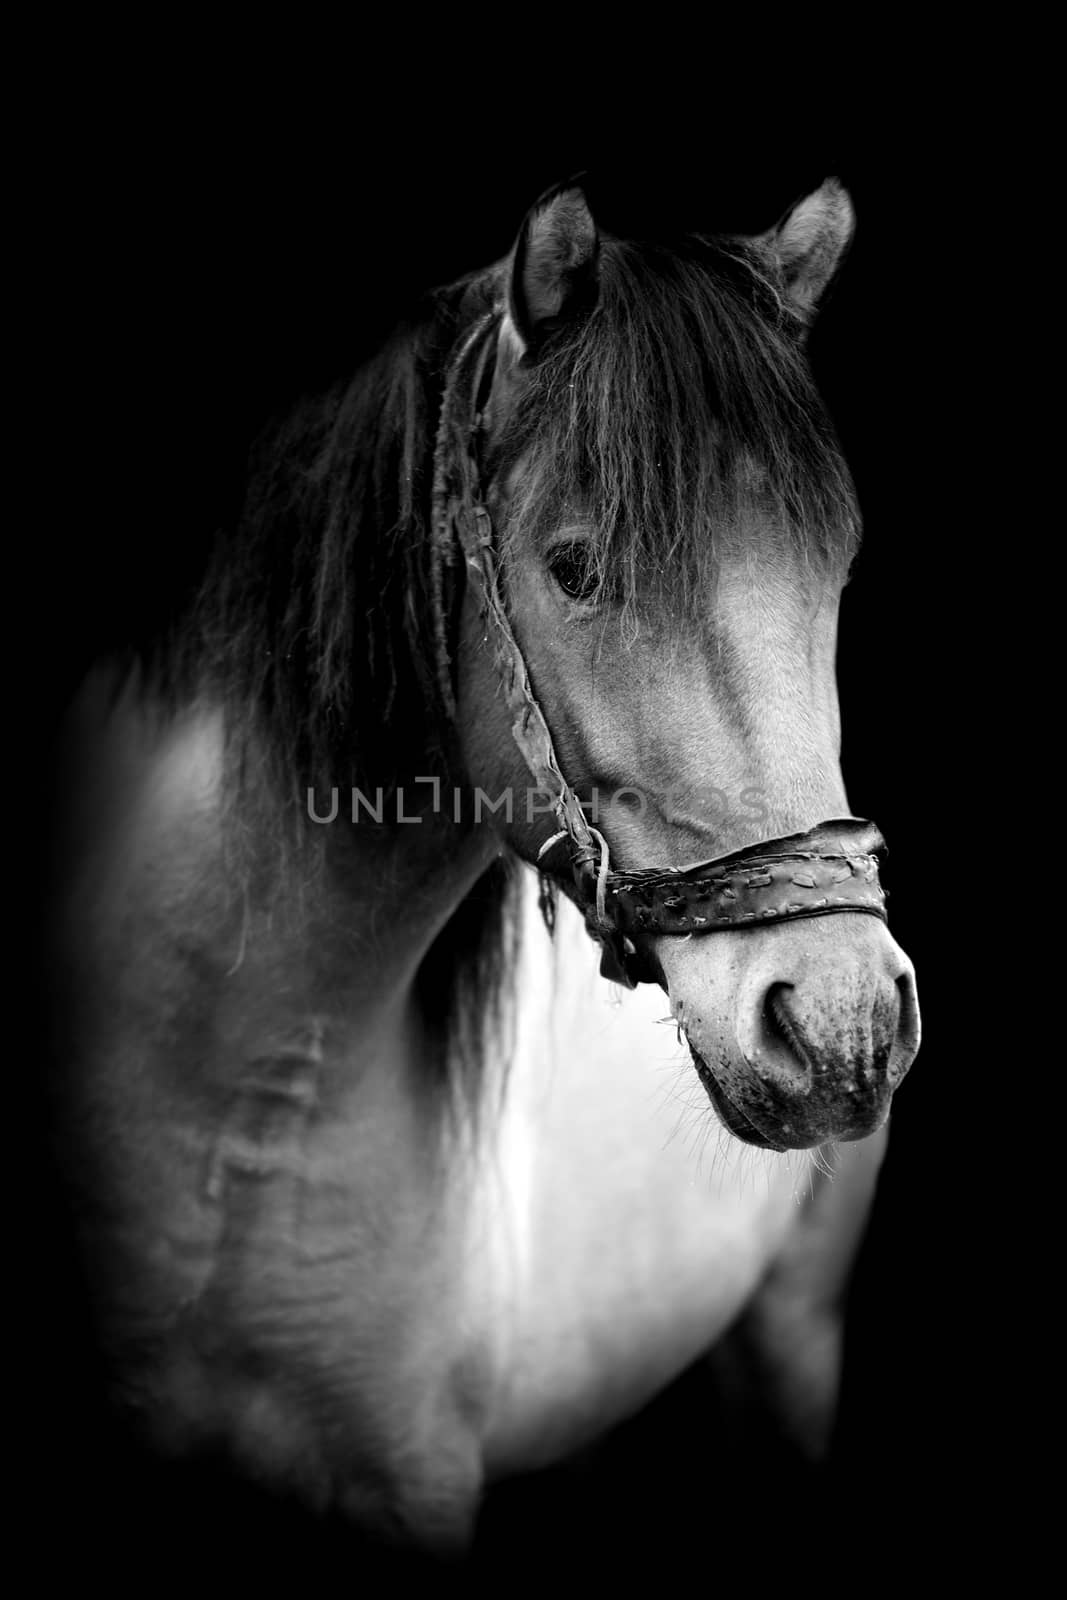 Horse on dark background. Black and white image